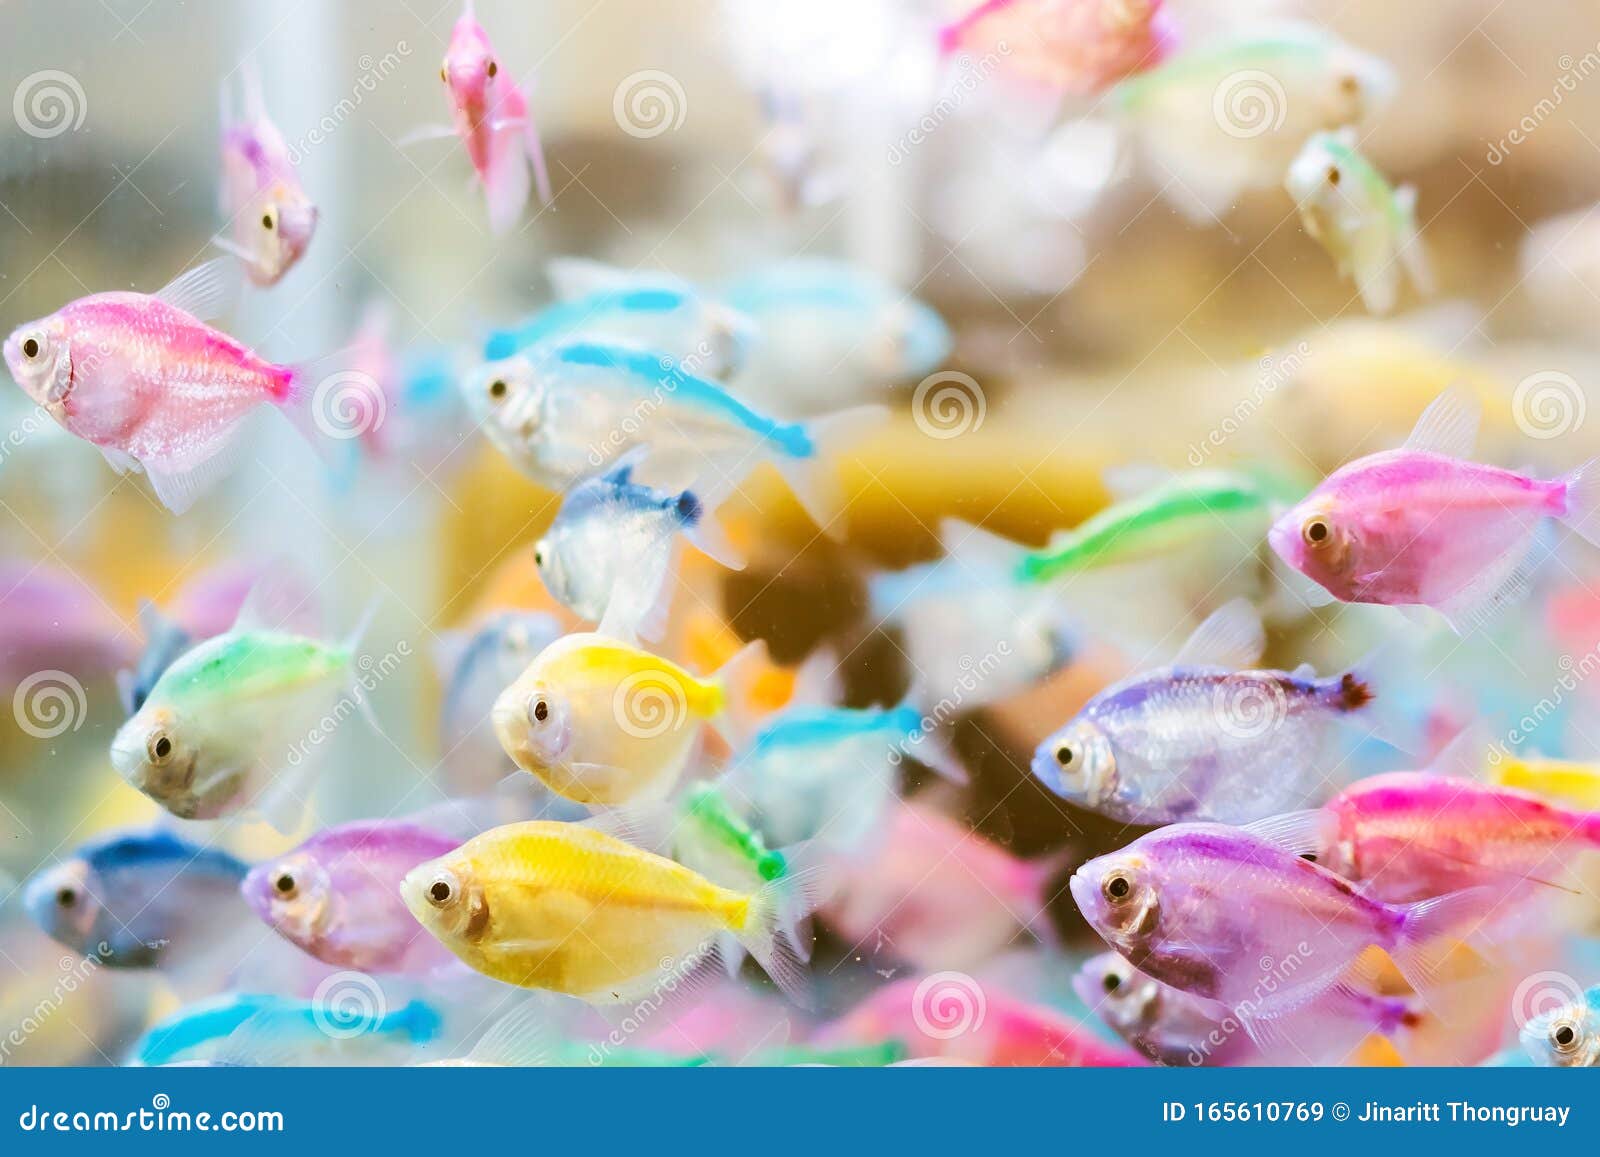 pet fish for sale